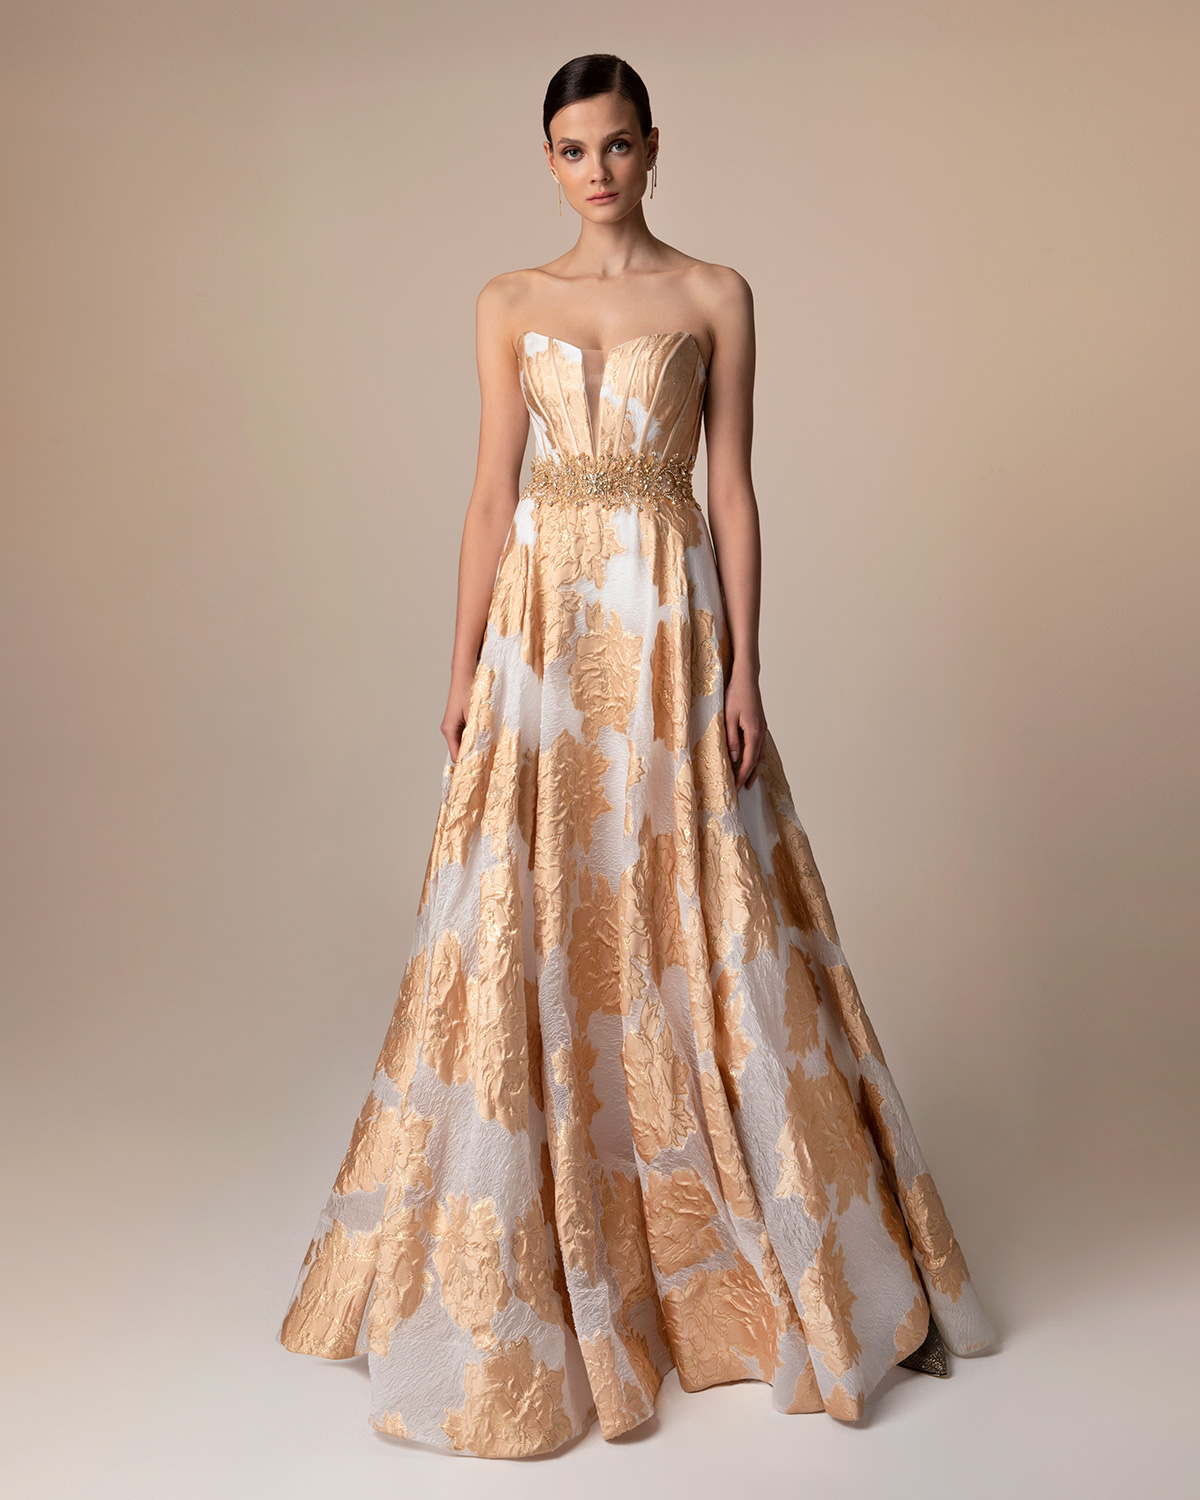 Long evening printed brocade dress with beading around the waist